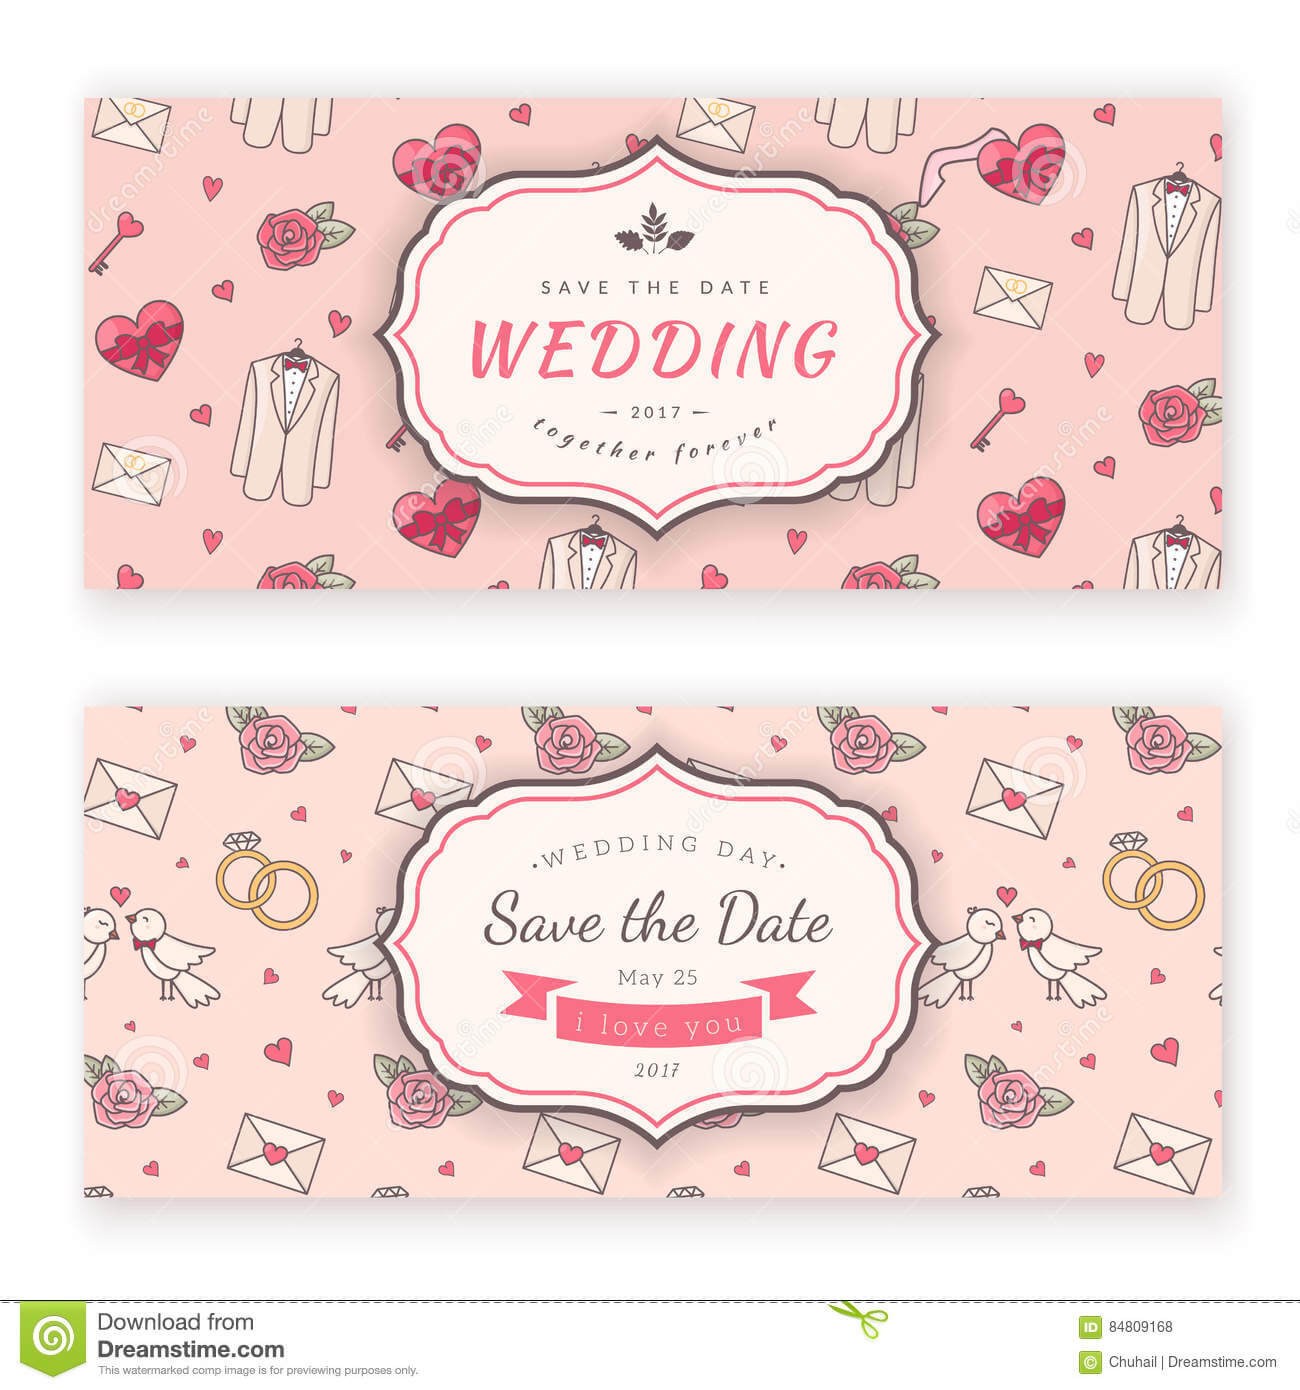 Wedding Banner Template. Stock Vector. Illustration Of For Wedding Banner Design Templates